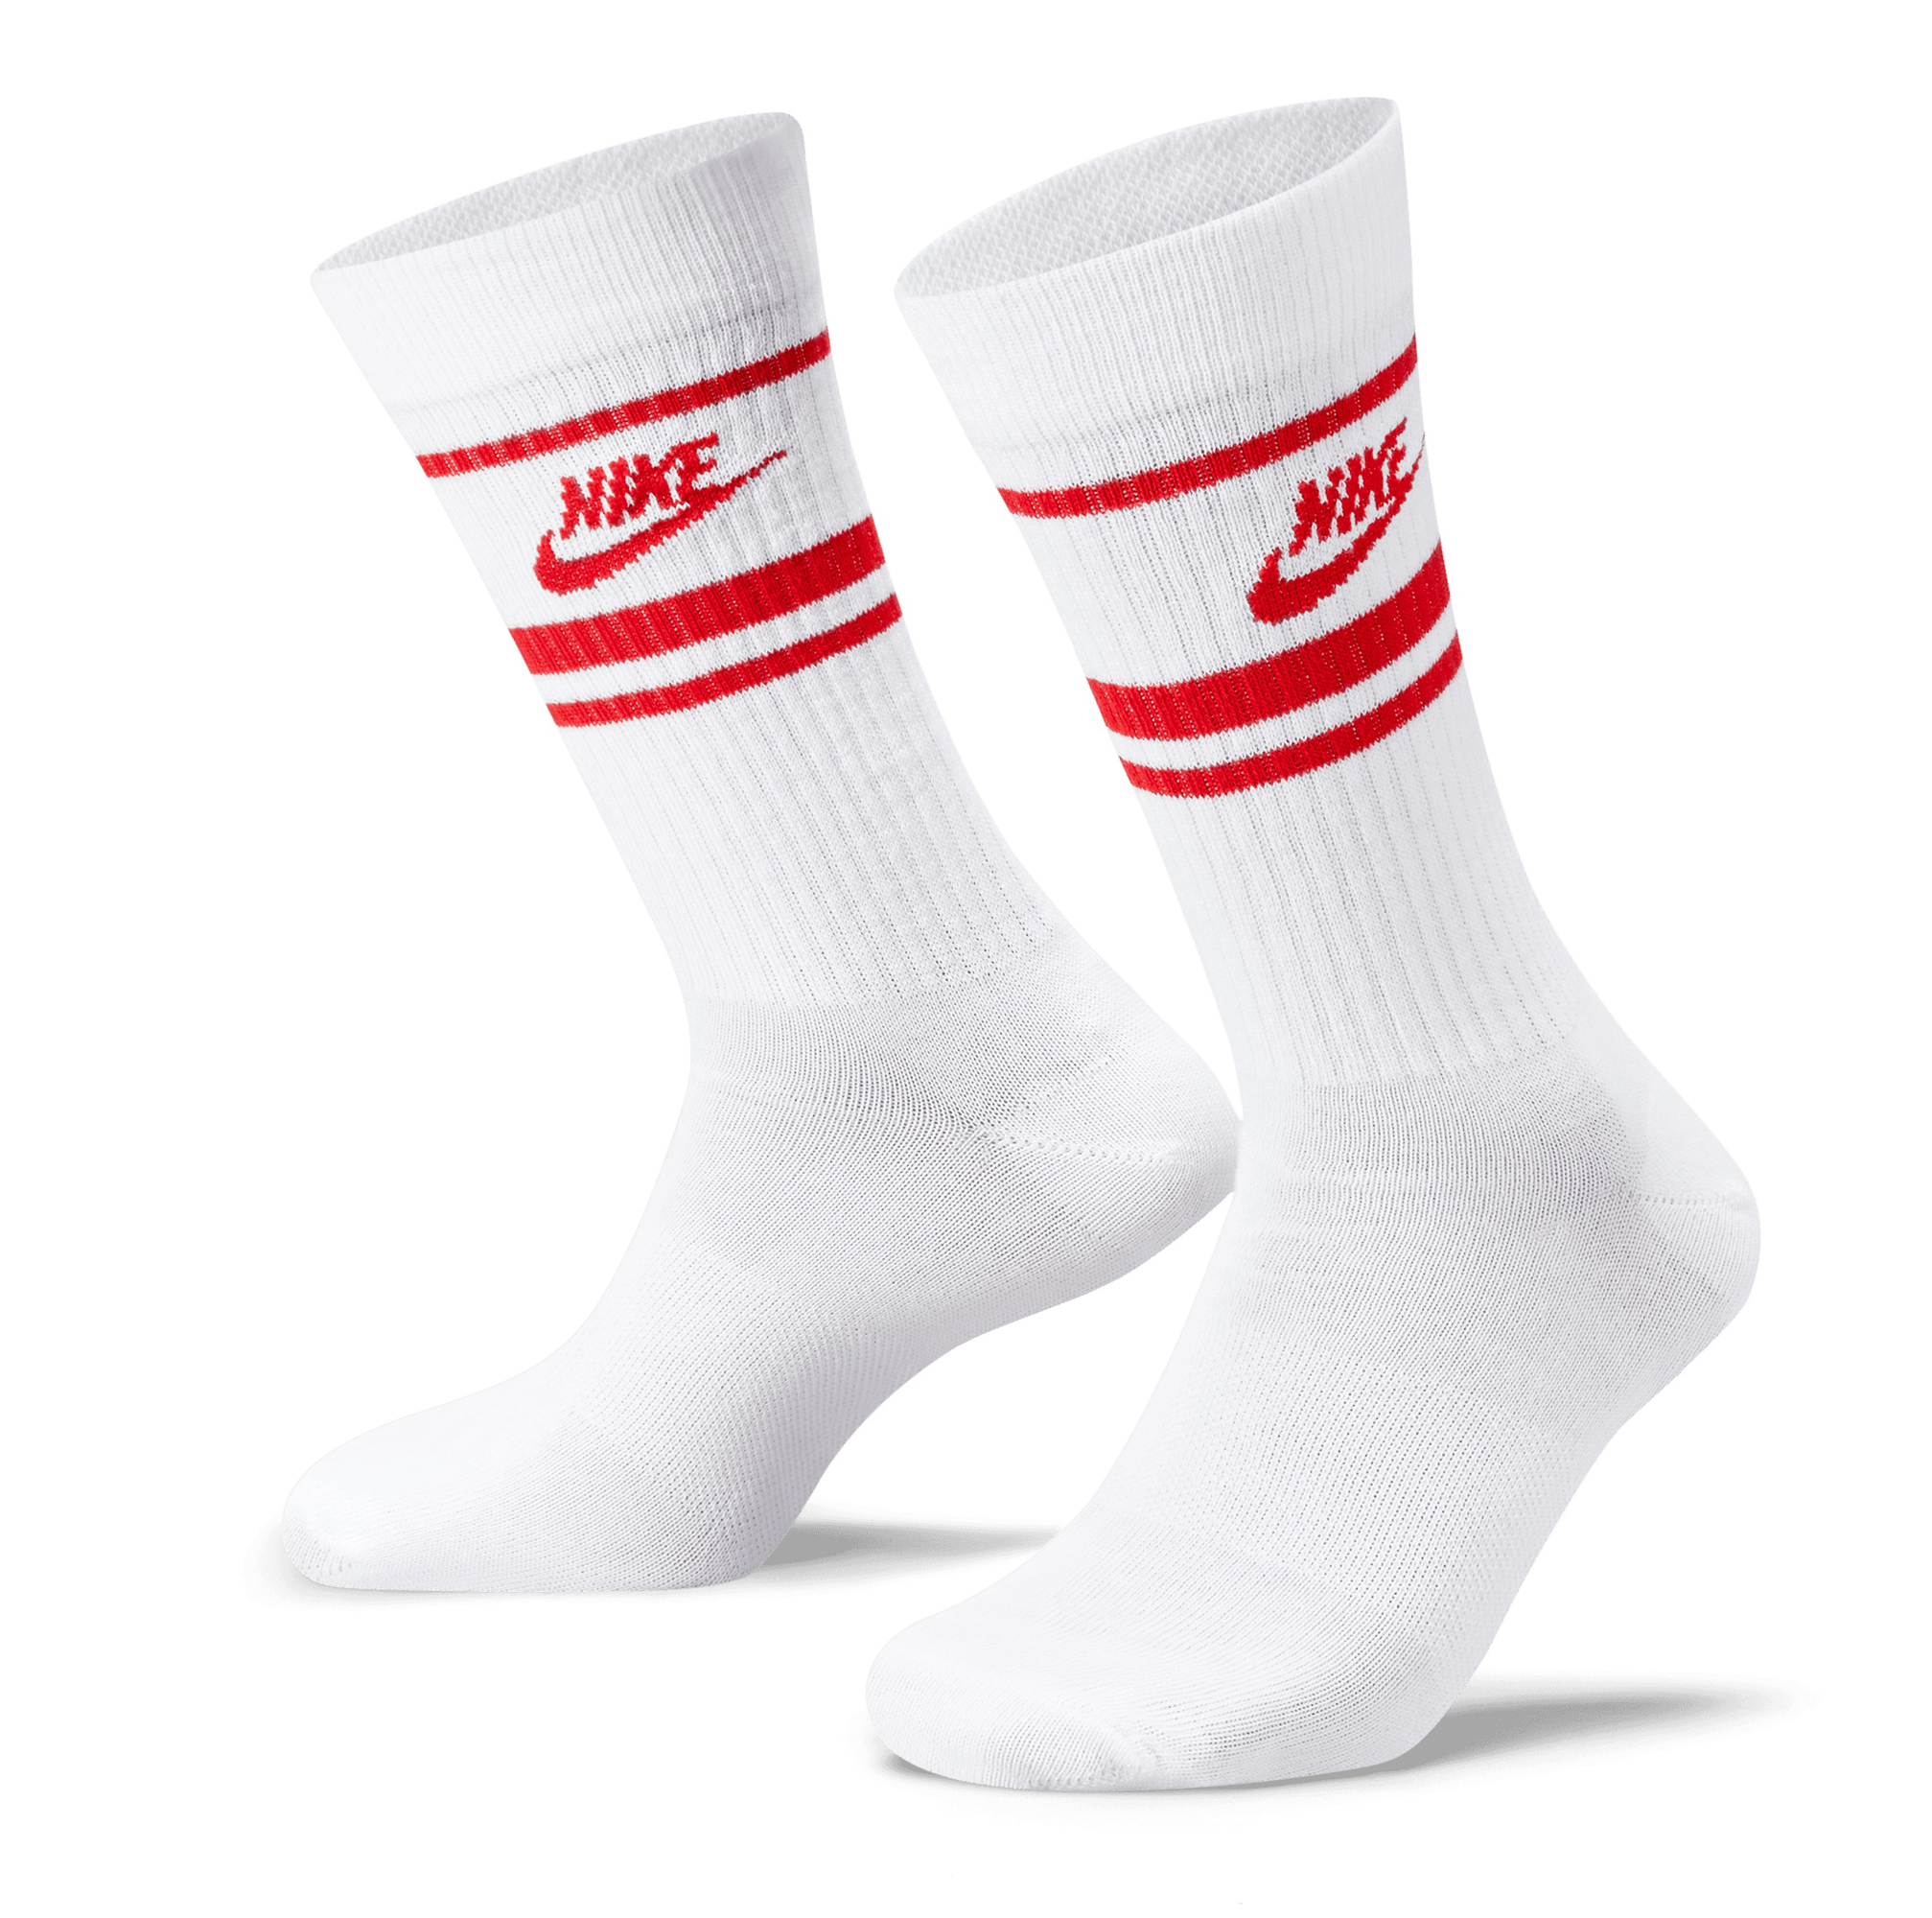 Unisex носки Nike Crew Socks (3 Pairs)